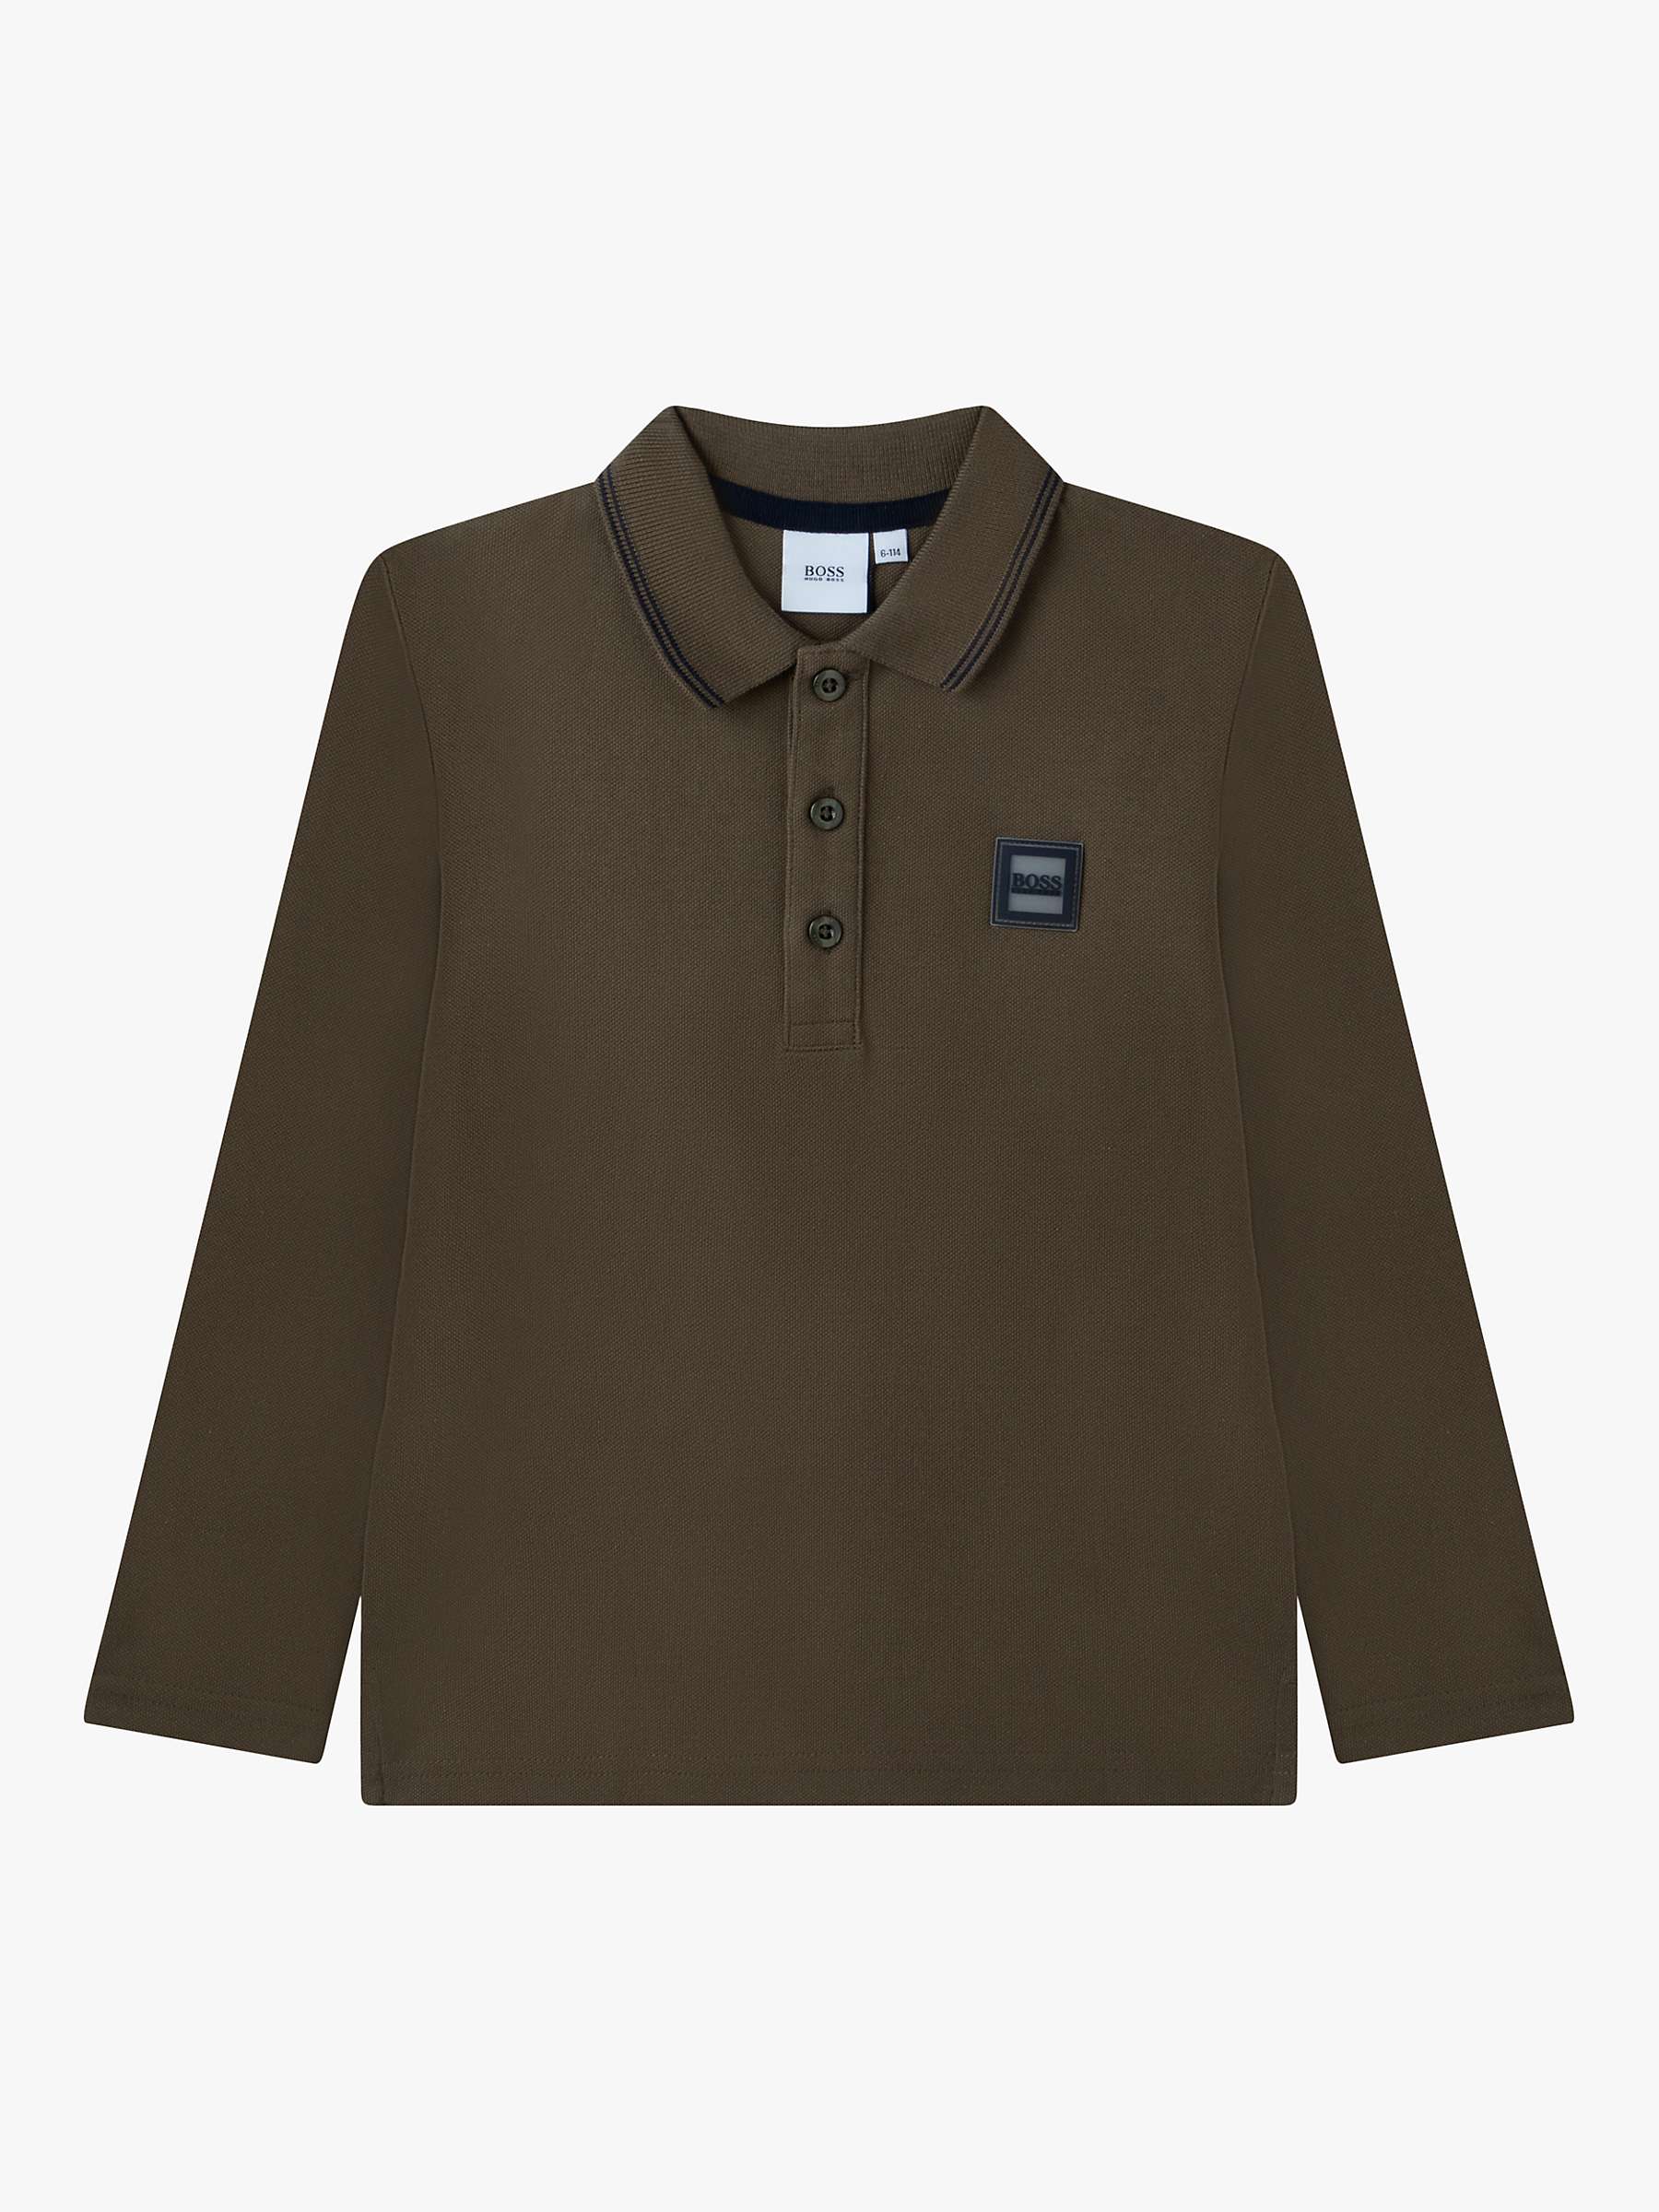 Buy HUGO BOSS Kids' Long Sleeve Pique Cotton Polo Shirt Online at johnlewis.com